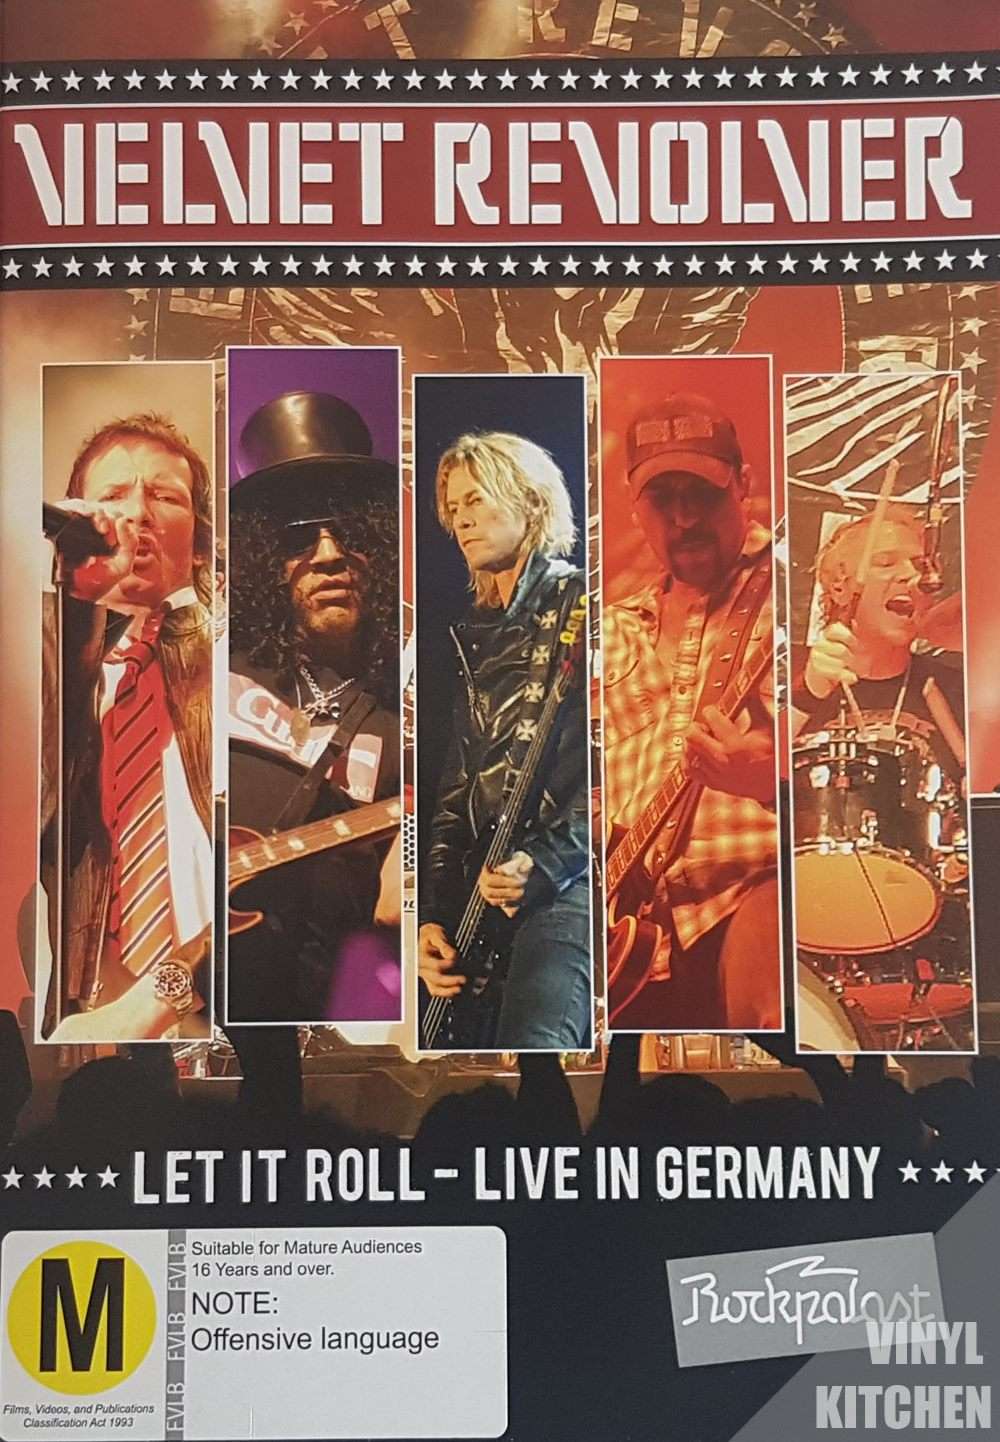 Velvet Revolver: Let It Roll Live in Germany